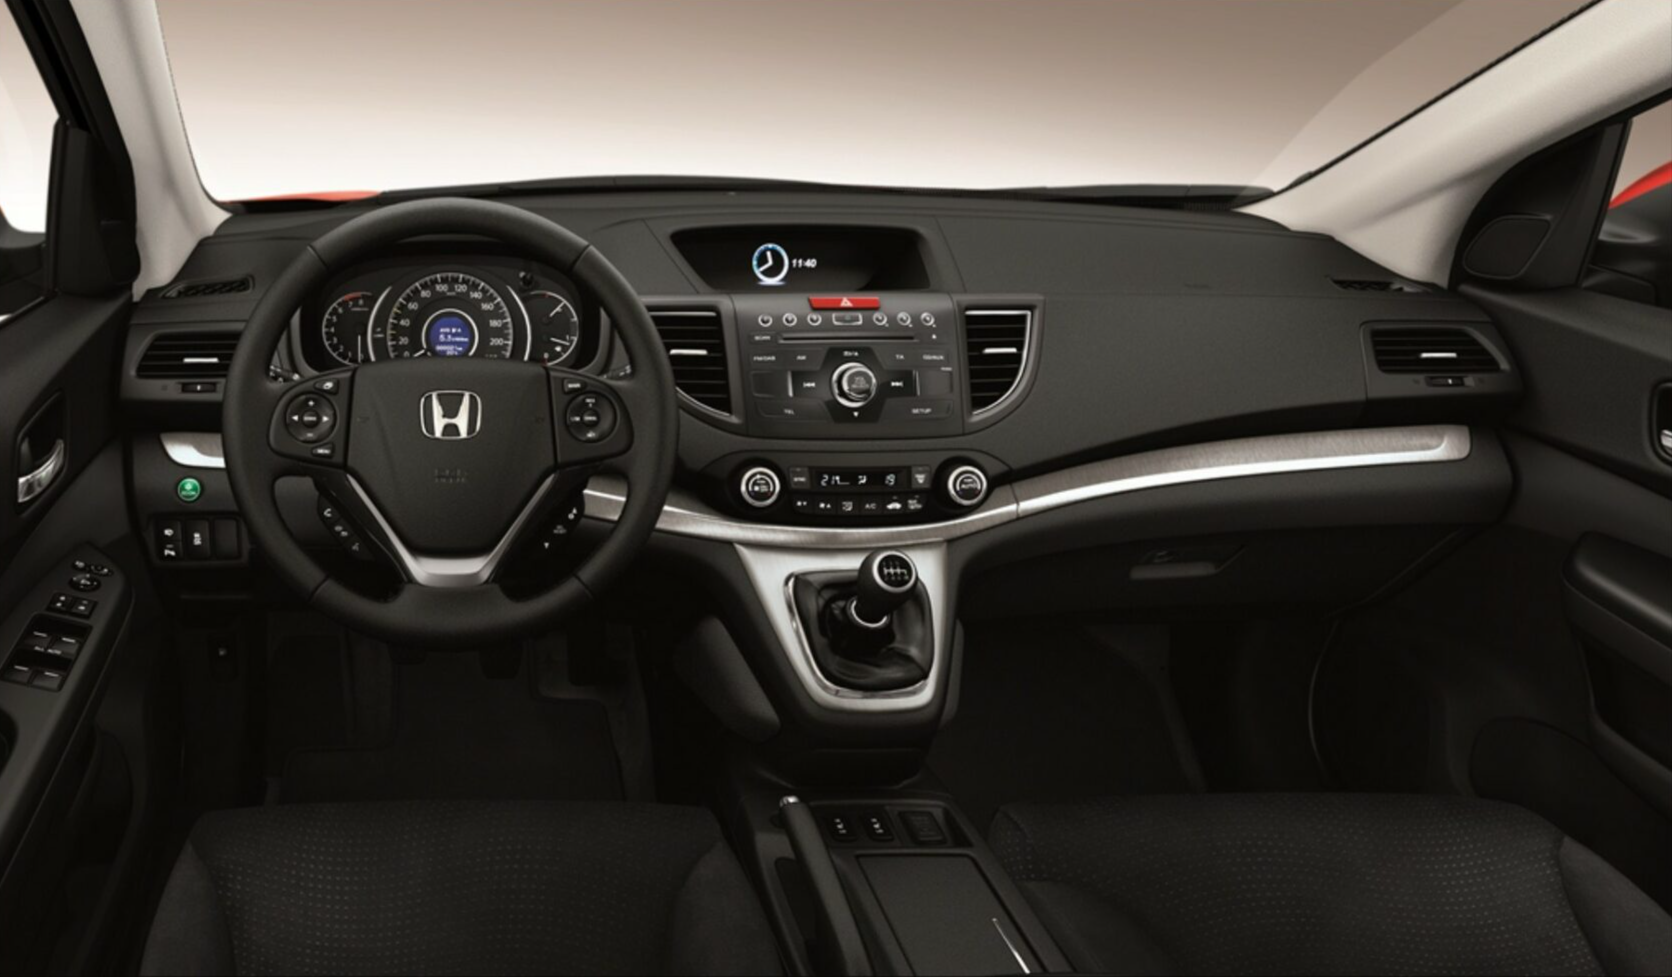 Honda v панель. Хонда CRV 2014 салон. Honda CRV 2014 салон. Honda CRV 4 поколение. Хонда ЦРВ 2013 салон.